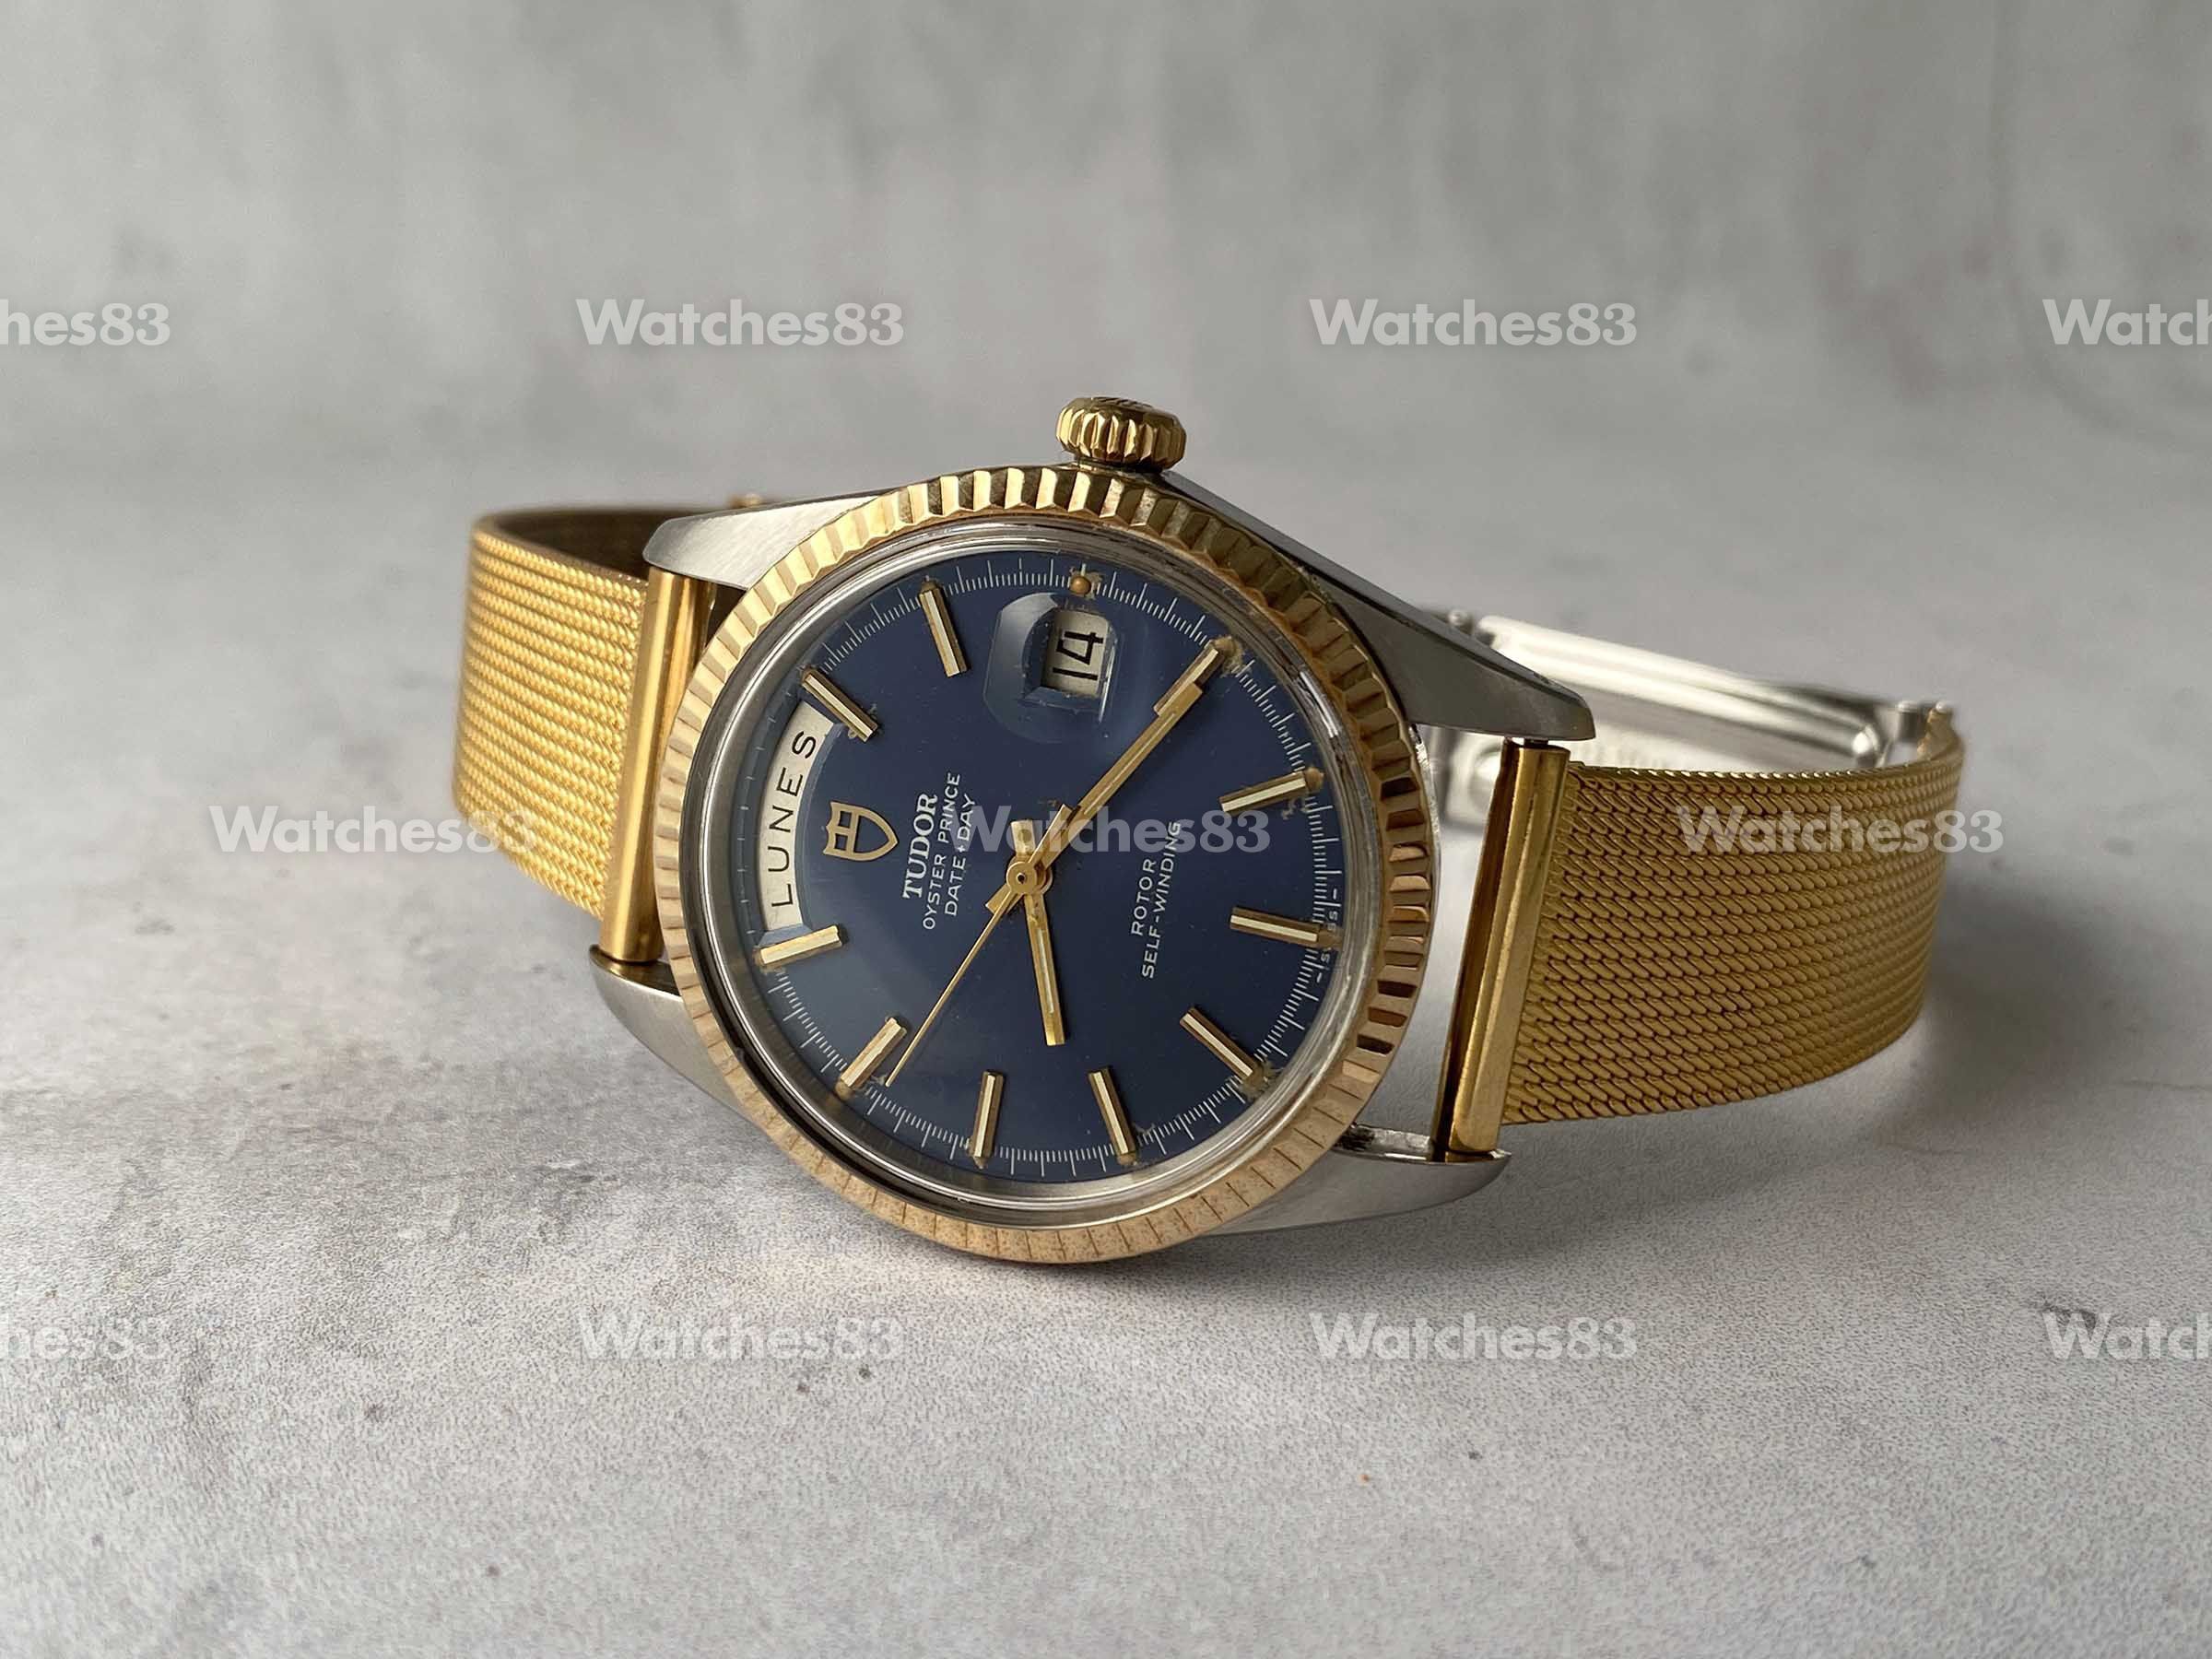 Premium Milanese Mesh Watch Strap in Yellow Gold – Nomad Watch